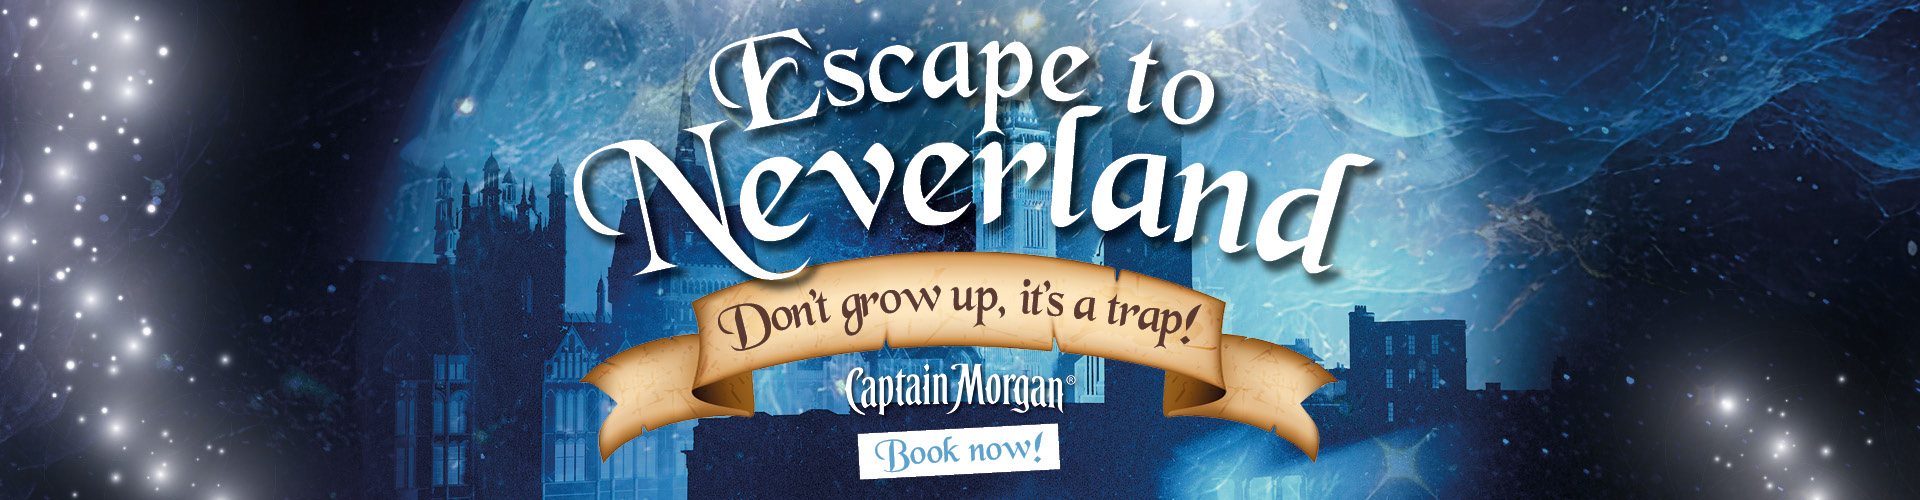 Escape to Neverland this NYE at Popworld Birmingham